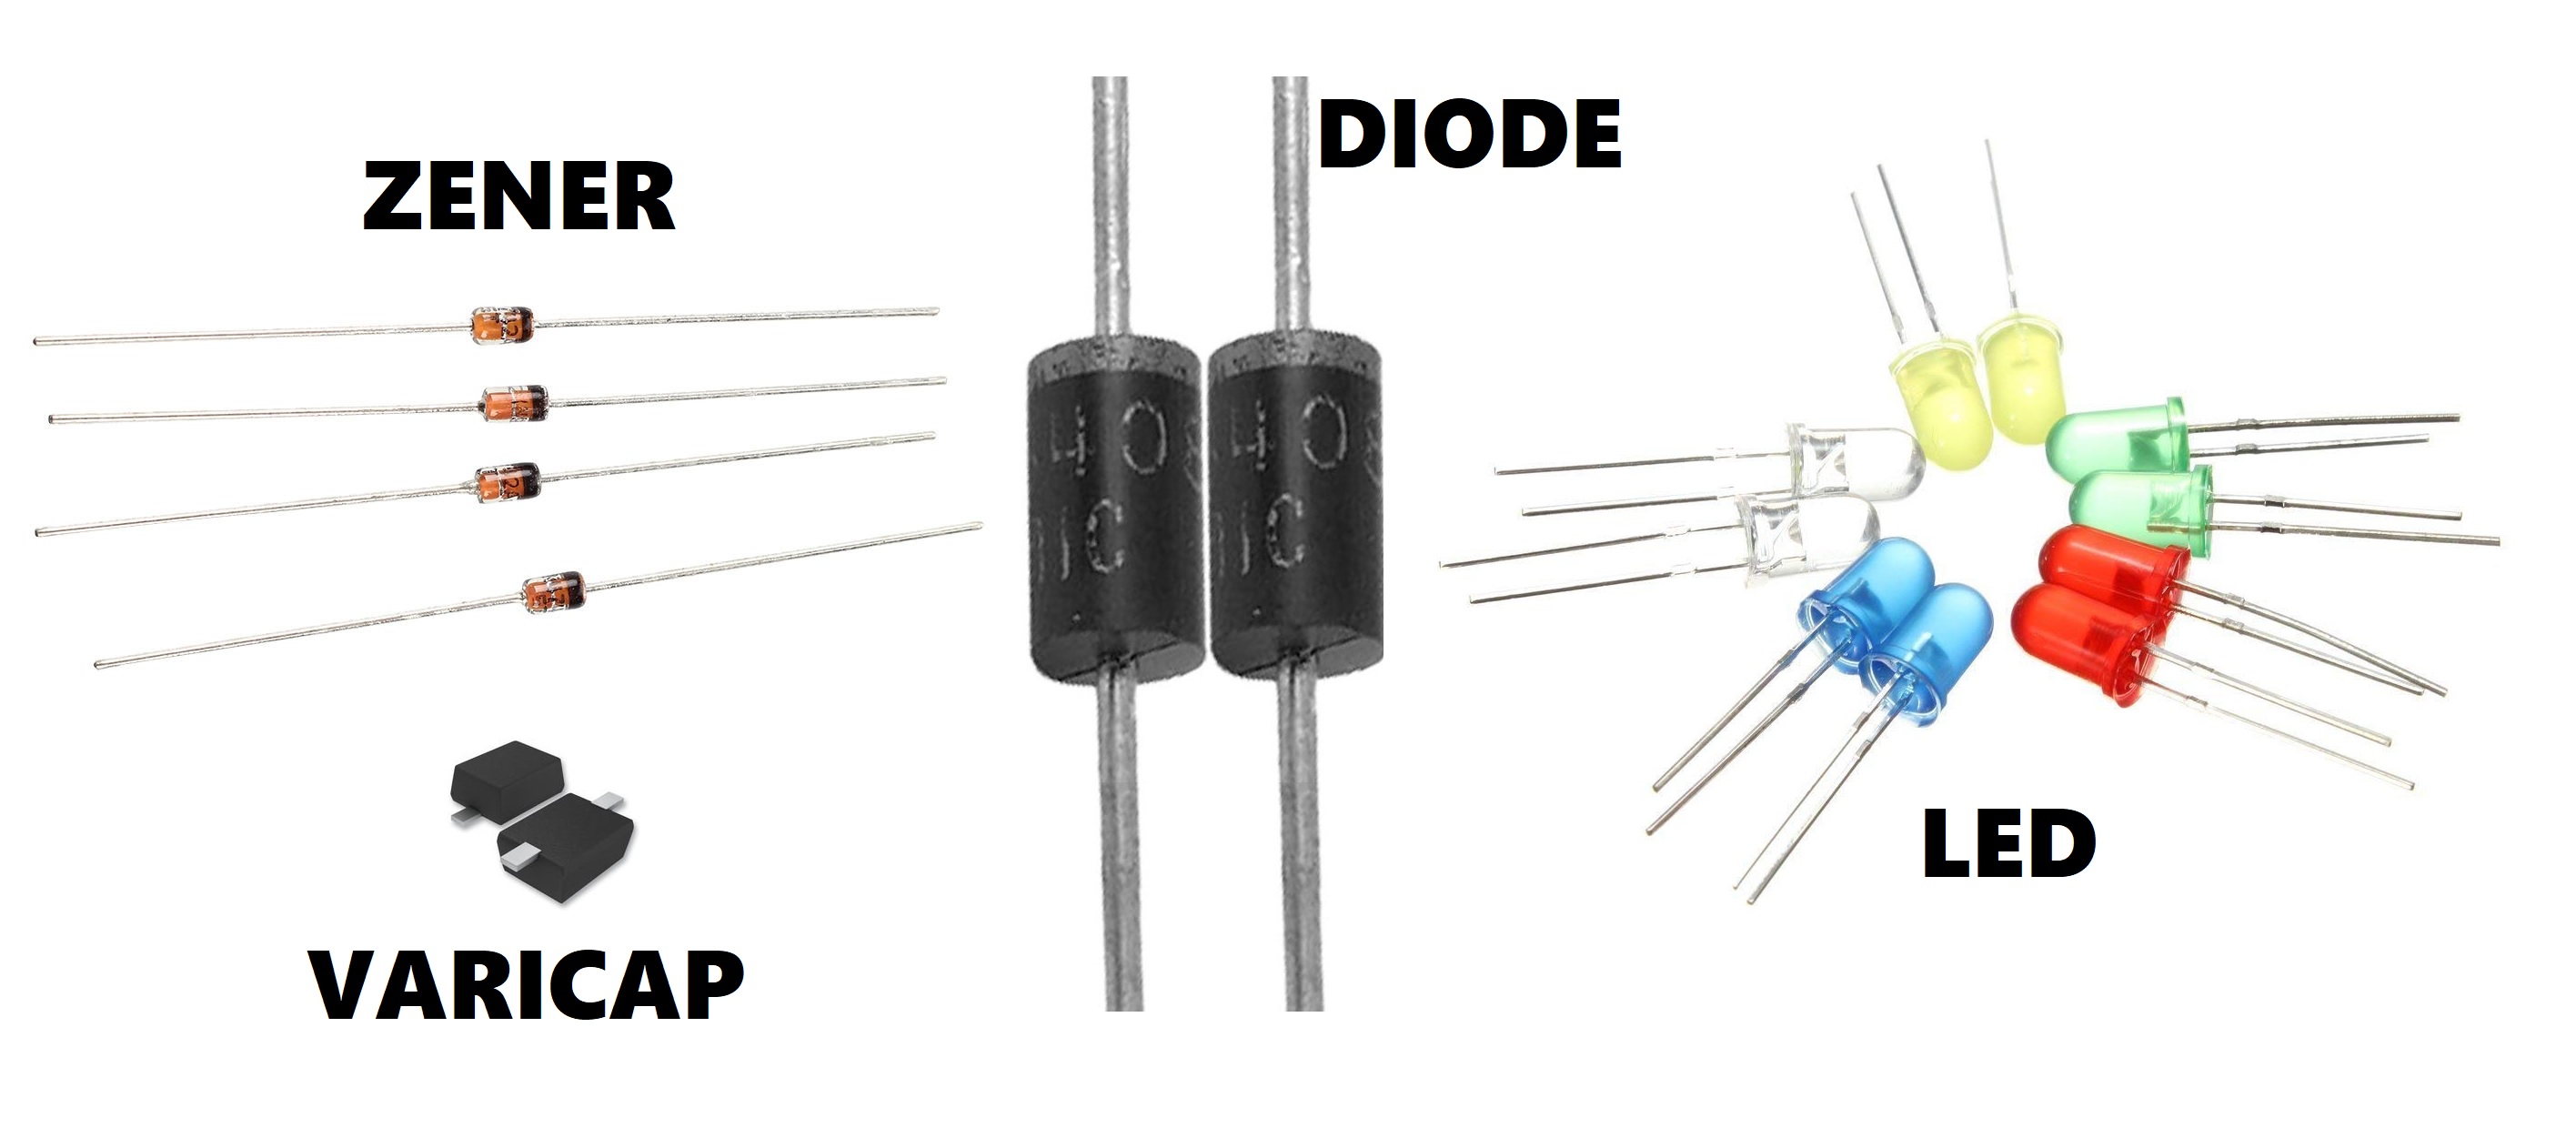 La diode